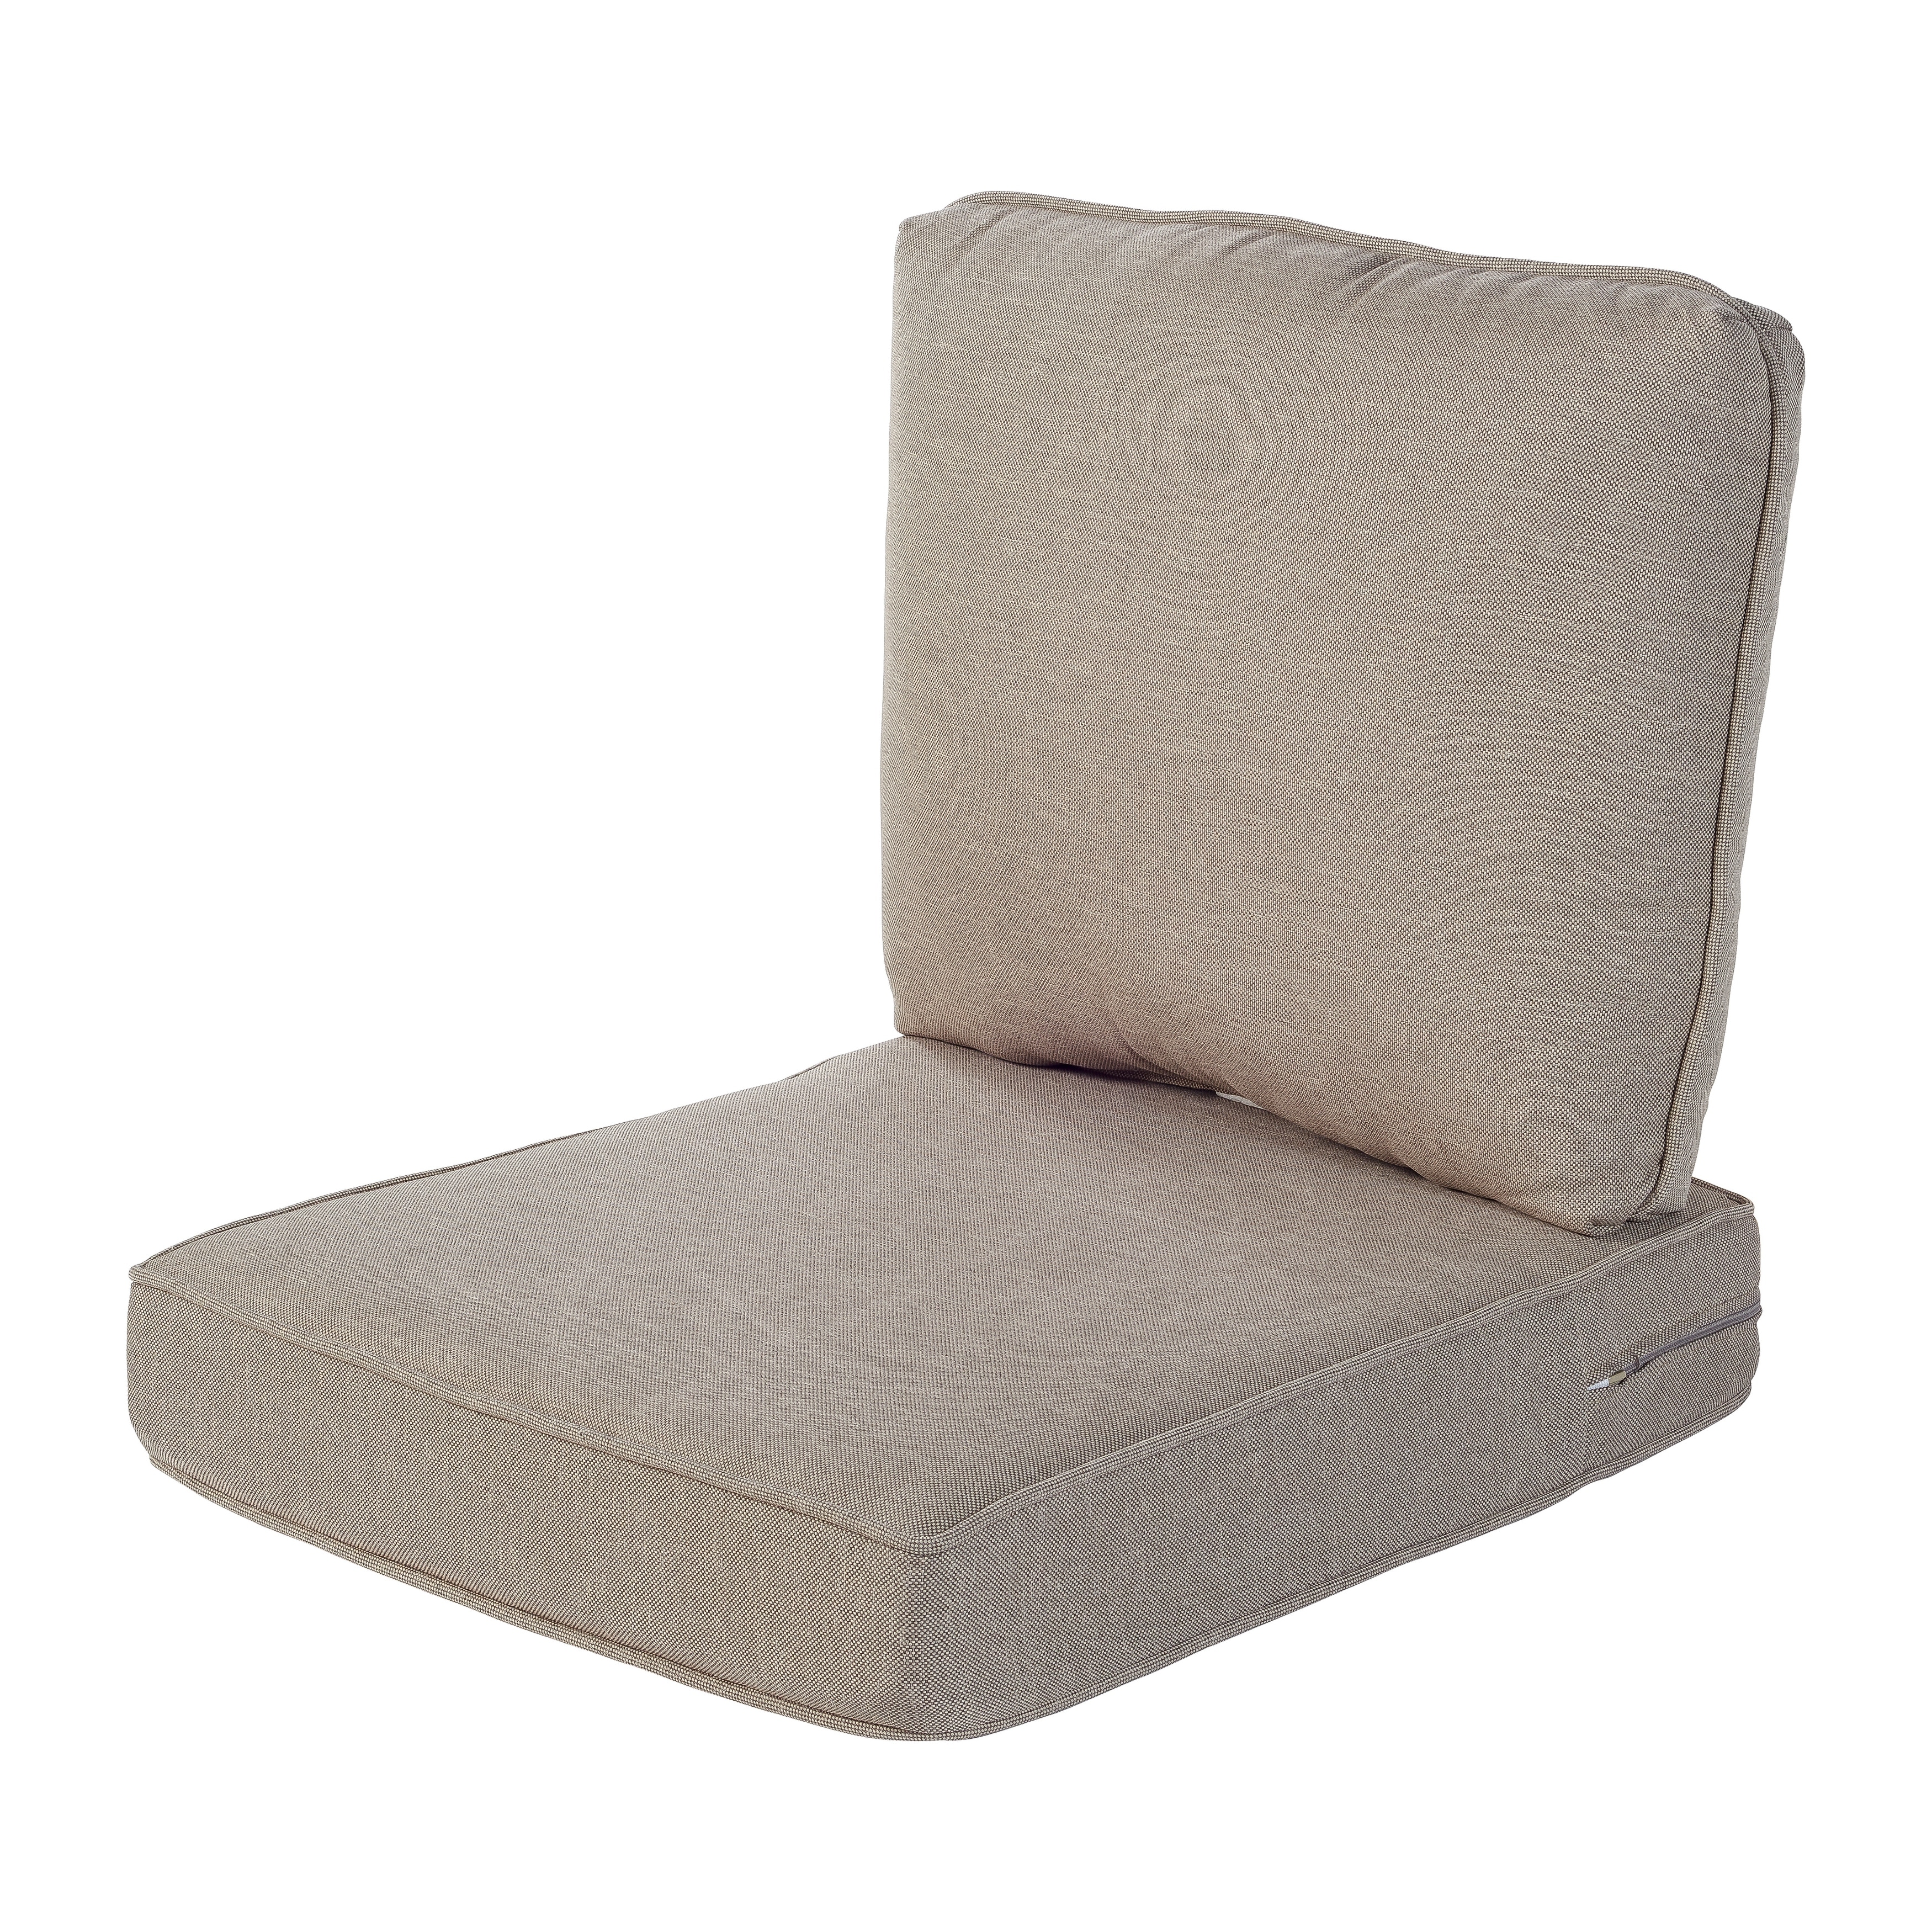 Haven Way Universal Outdoor Deep Seat Lounge Chair Cushion Set - 23x26 - Alpine